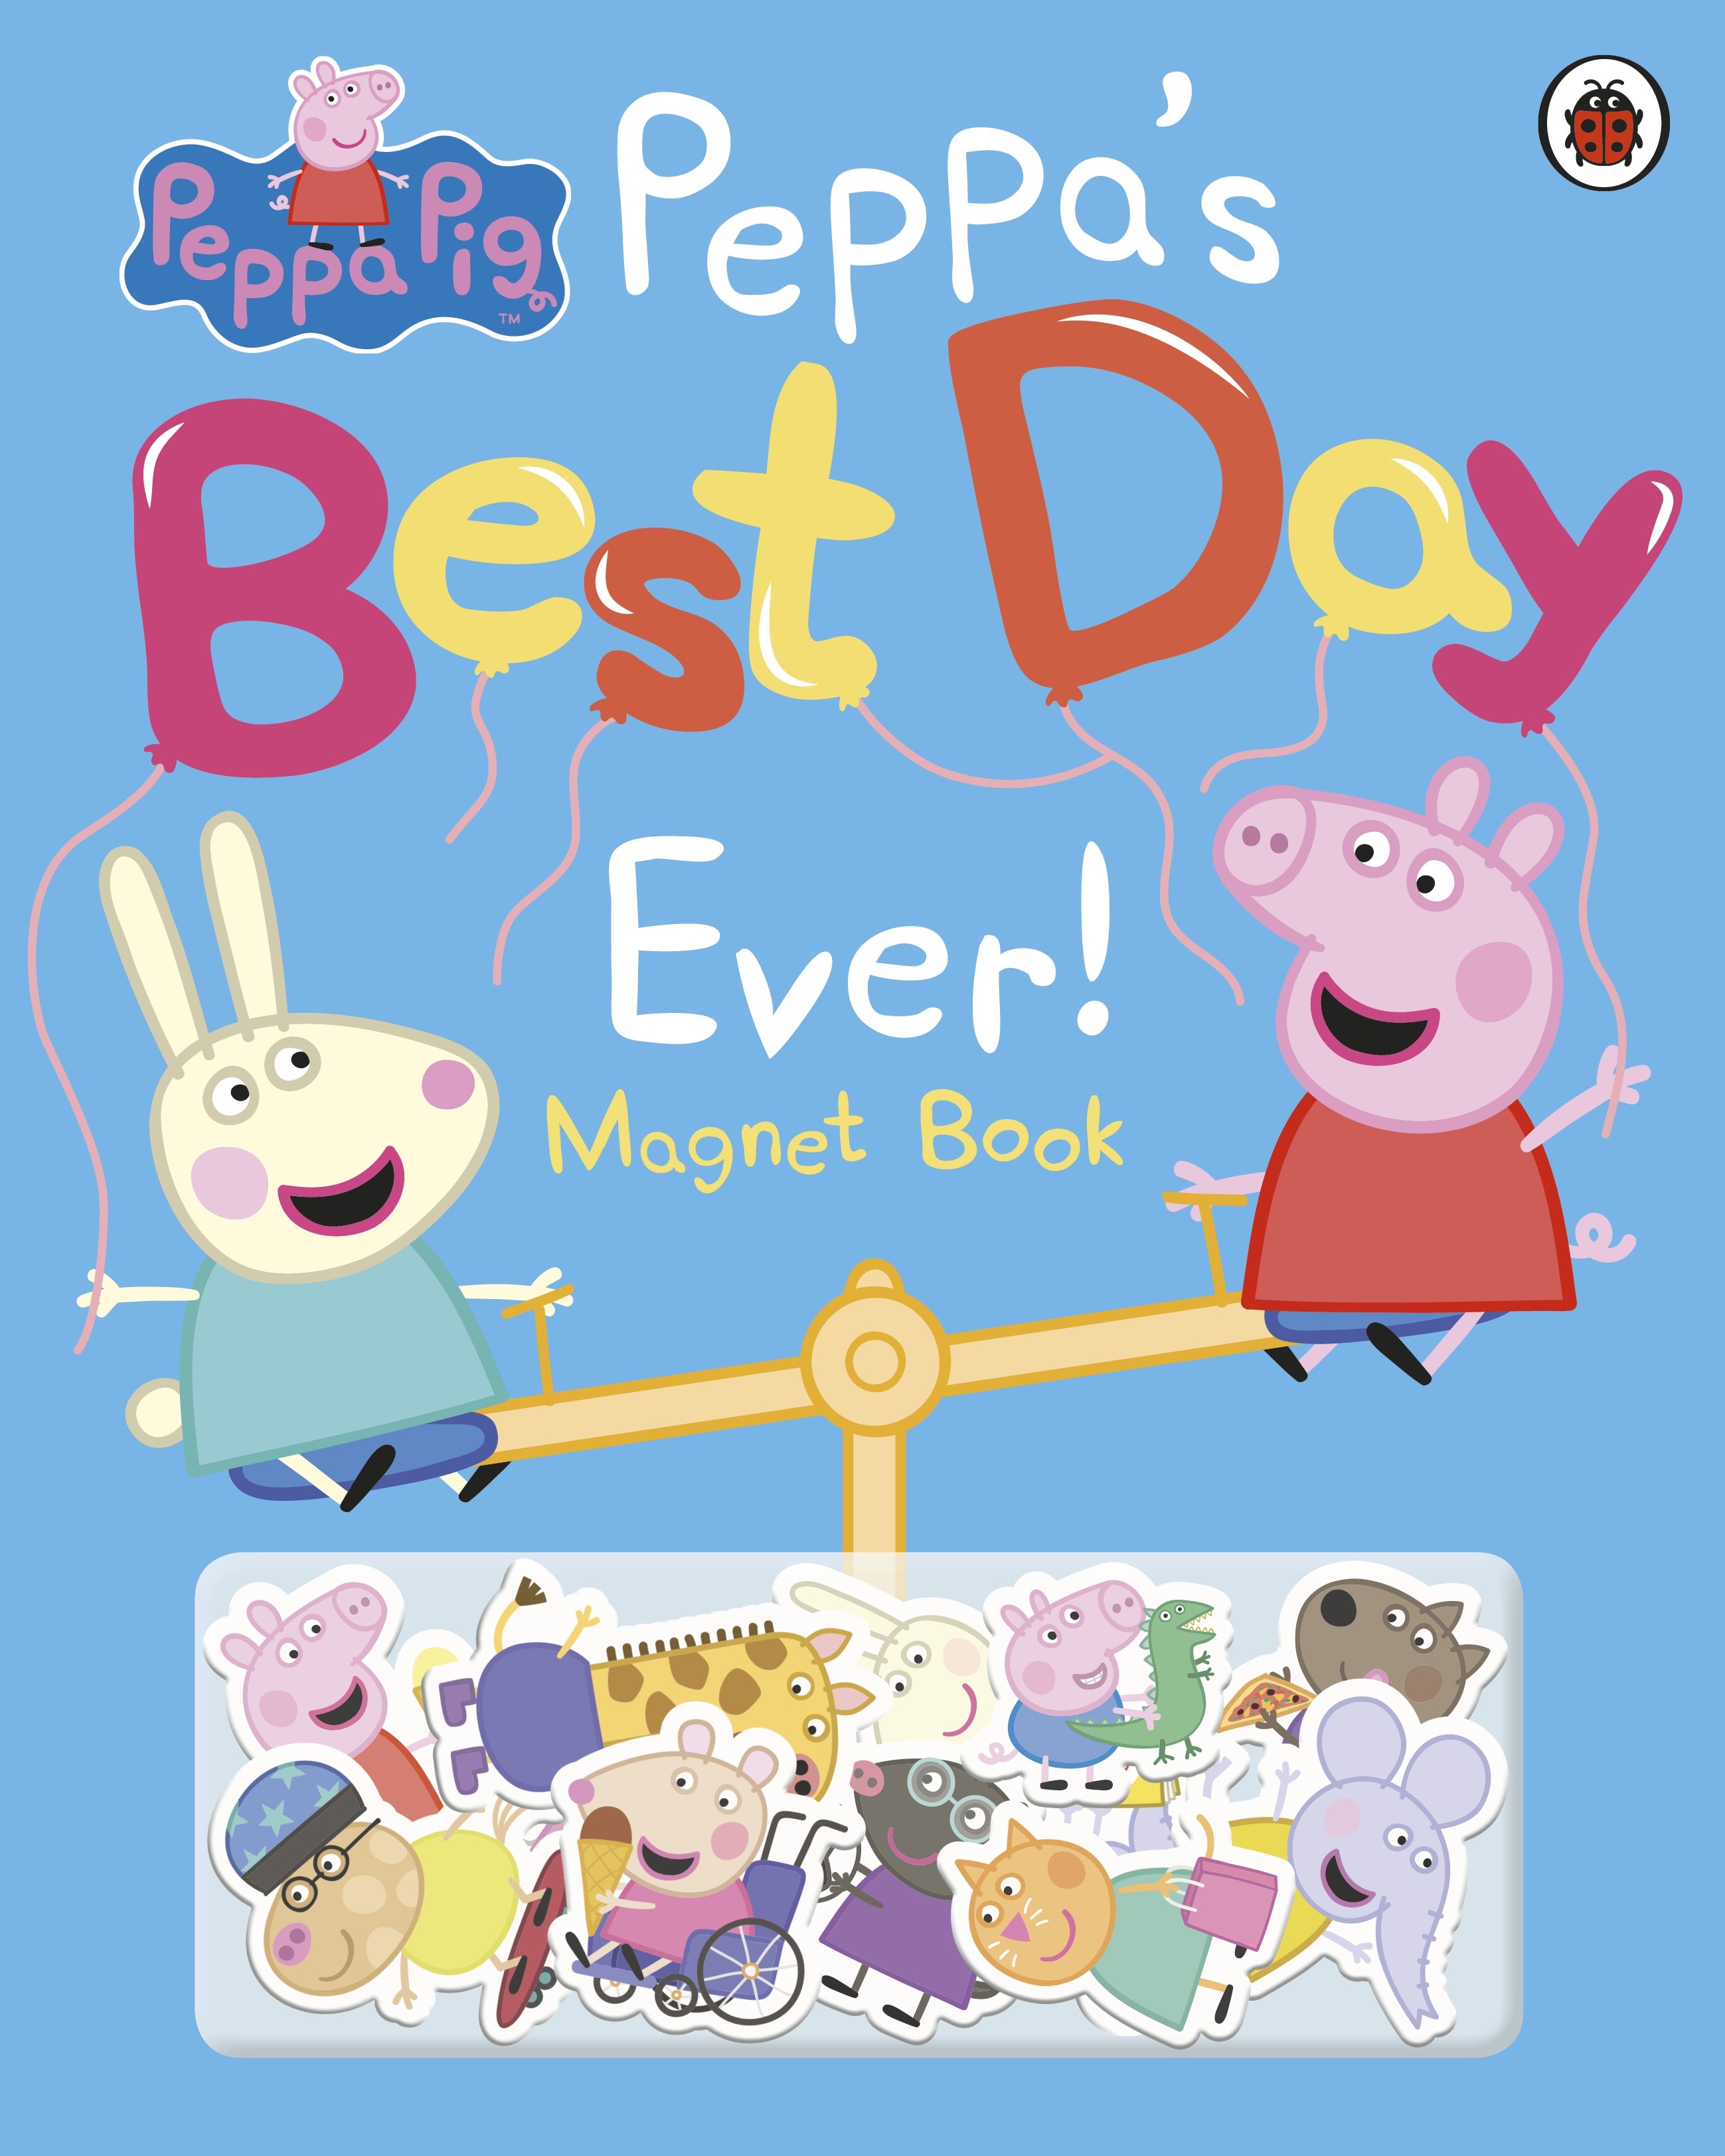 Book “Peppa Pig: Peppa's Best Day Ever” by Peppa Pig — September 17, 2020